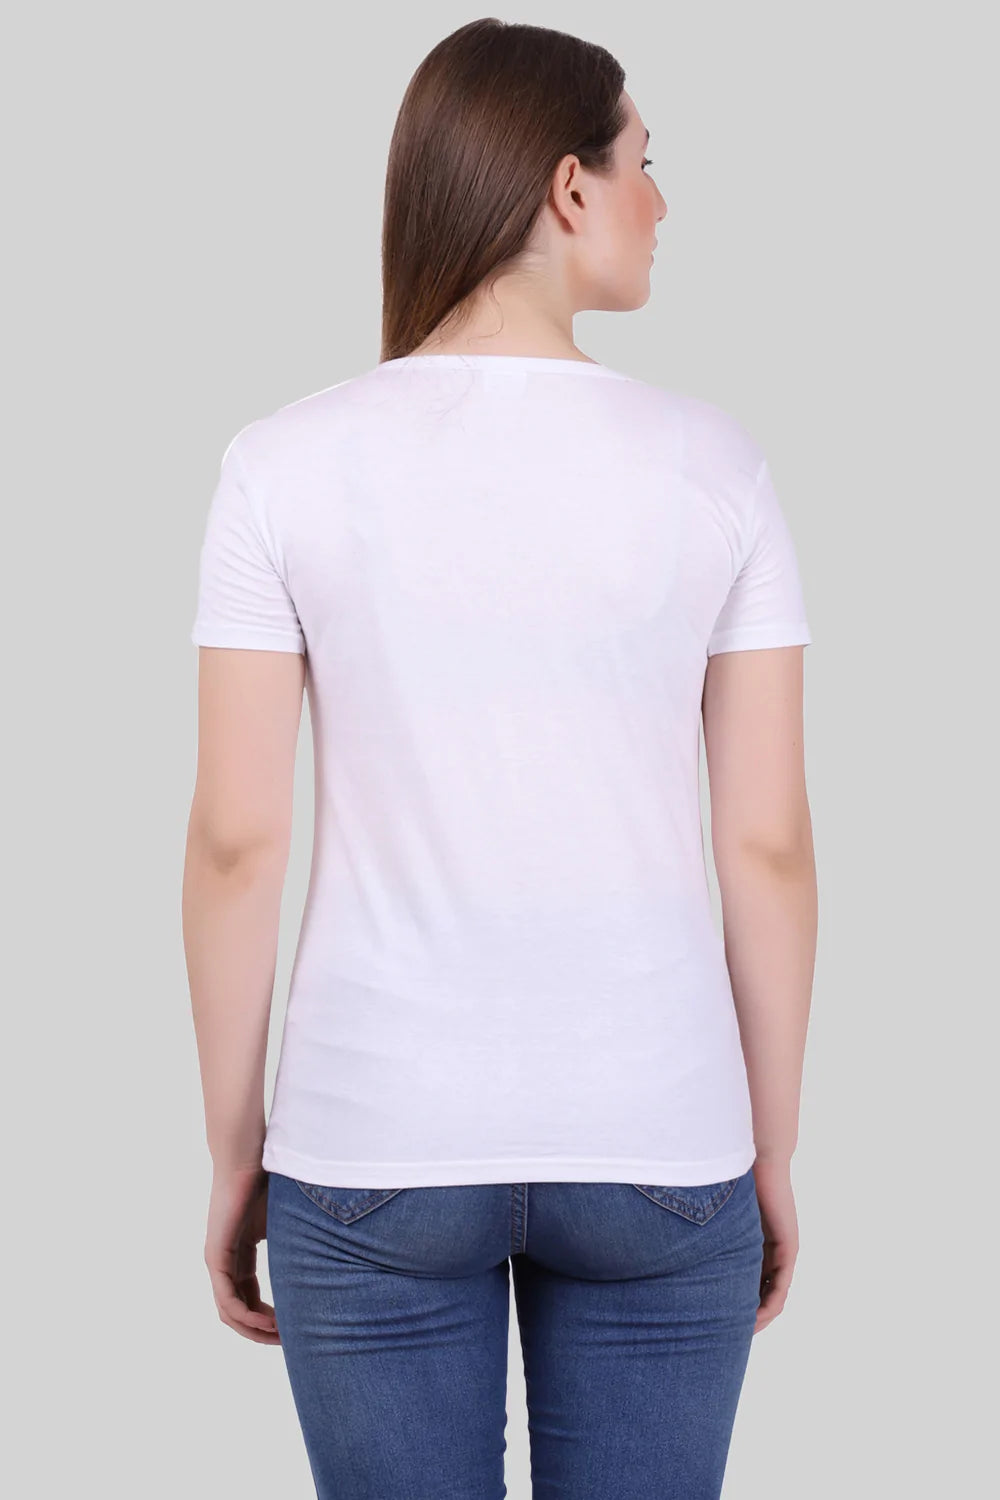 Women's Cotton Plain V Neck Half Sleeve White Color T-Shirt